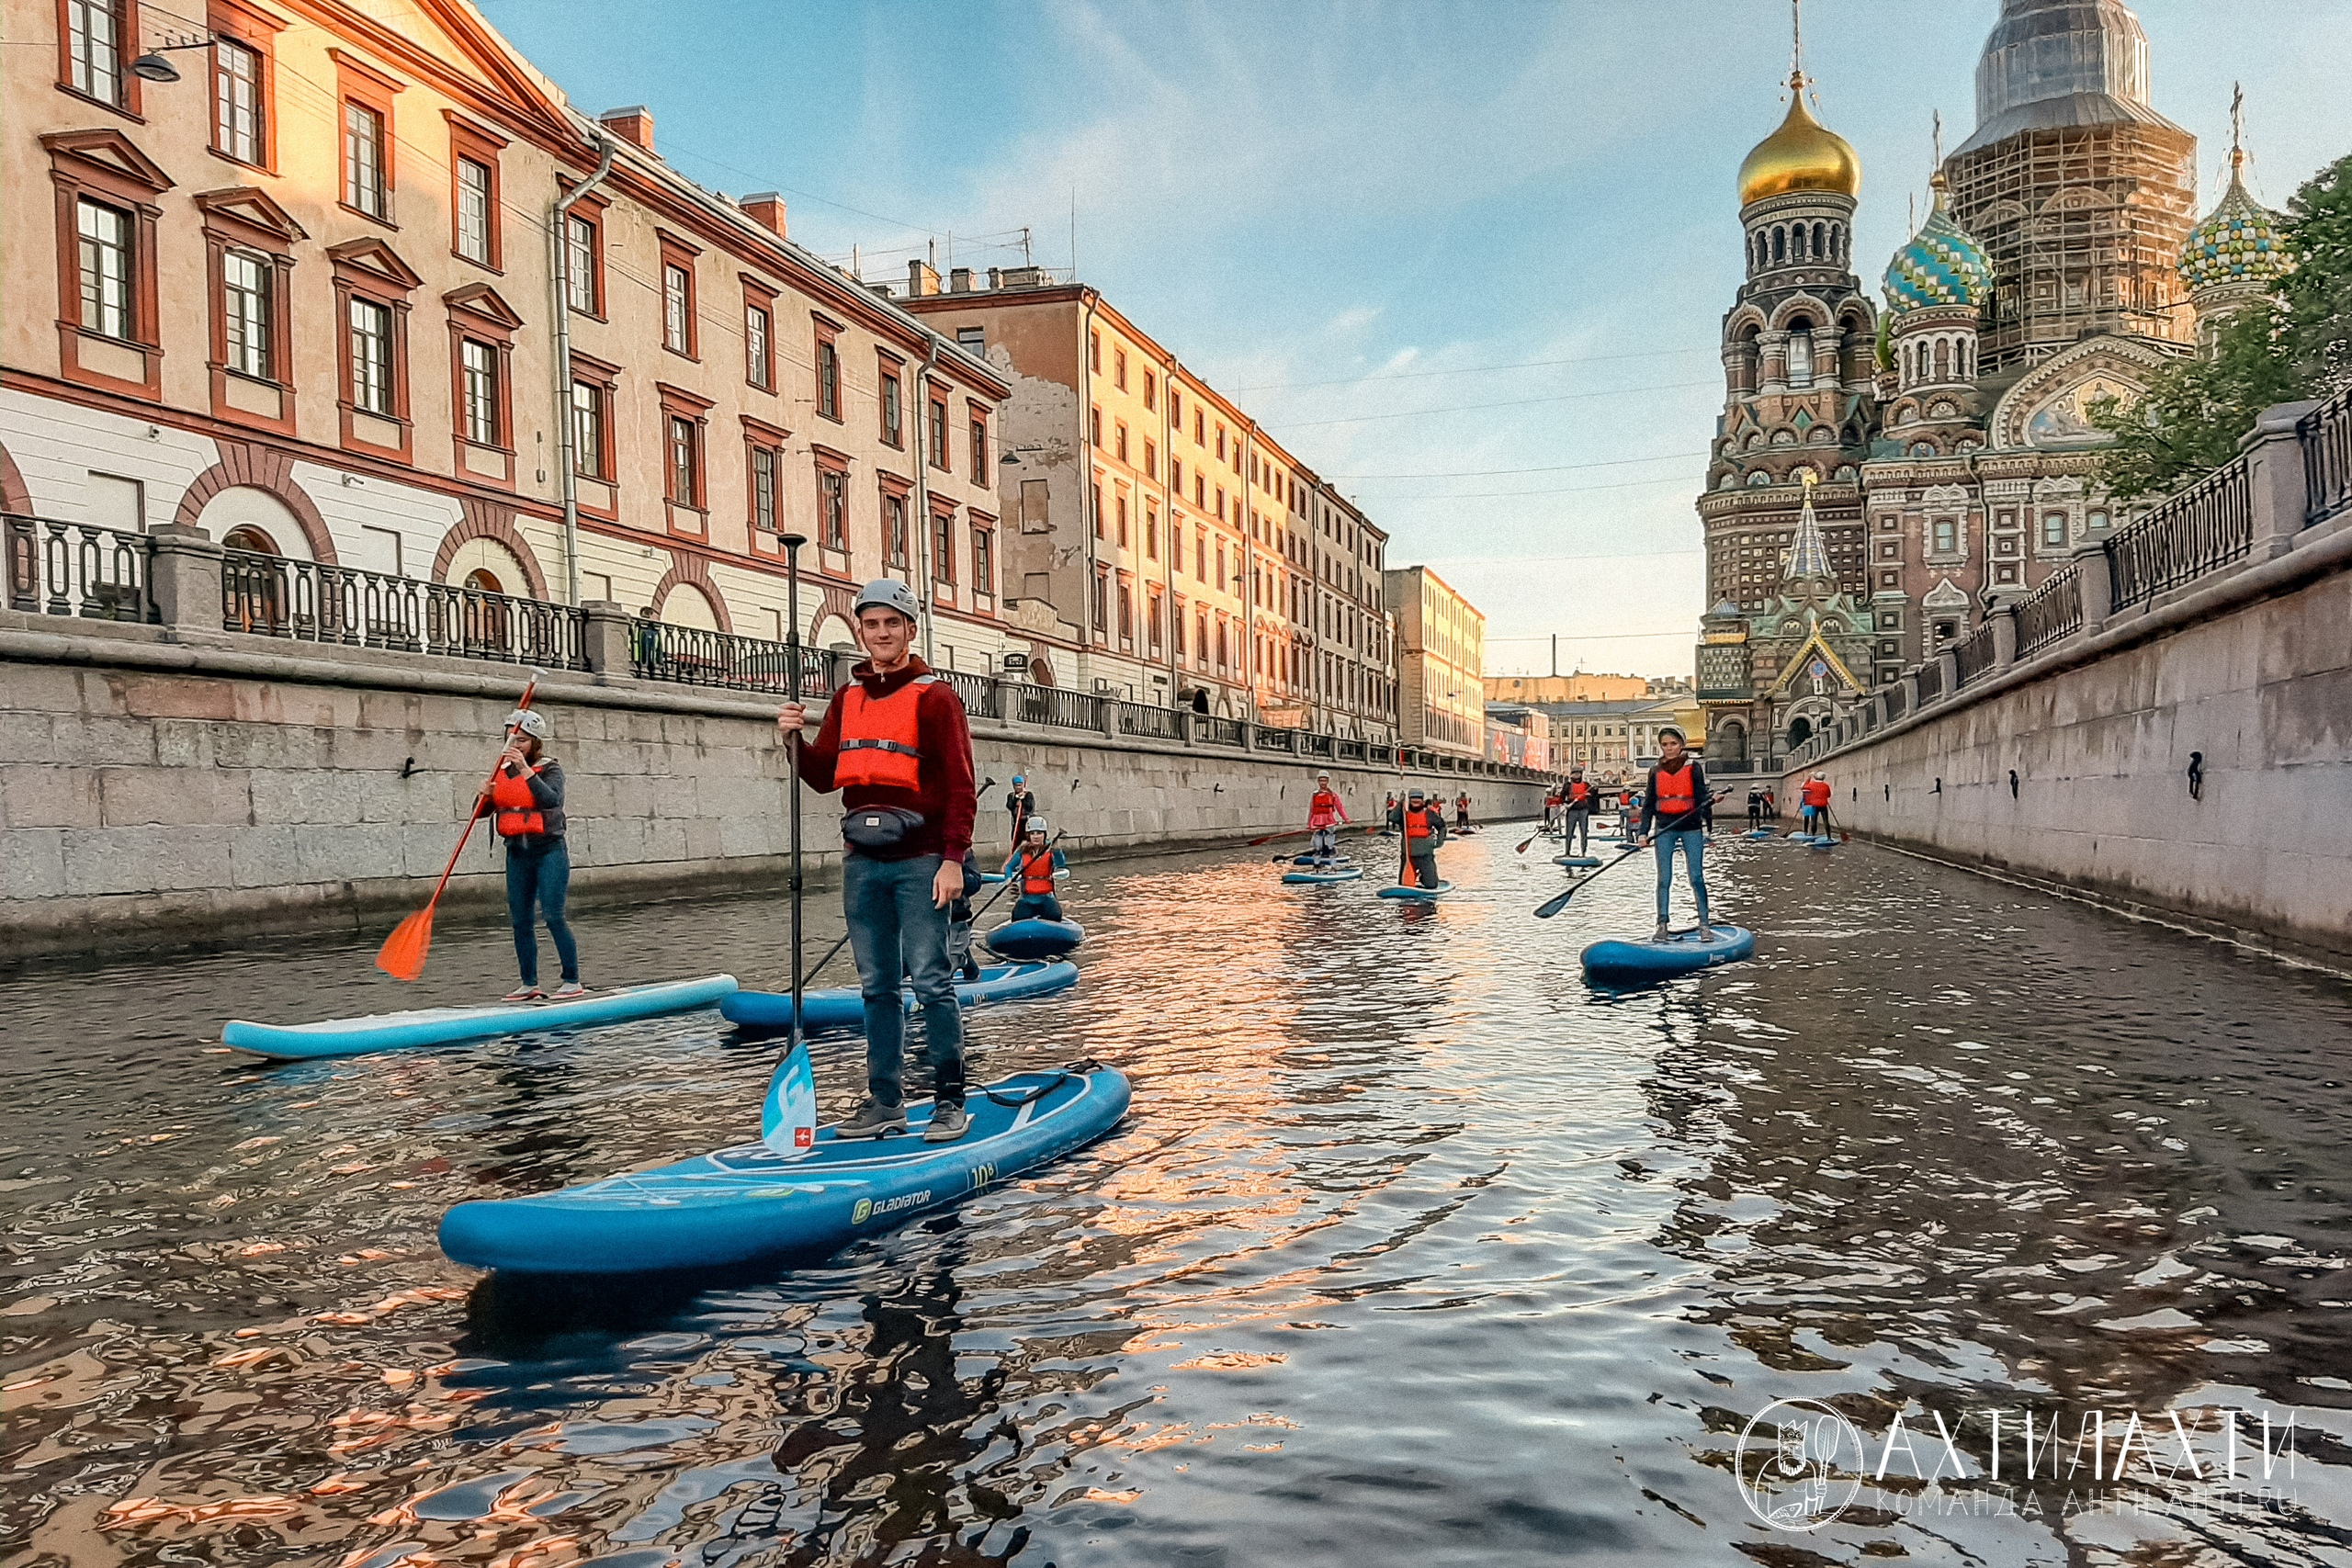 САП борд СПБ прогулки. Sup прогулка Санкт-Петербург. САП серфинг по каналам в Санкт-Петербурге.